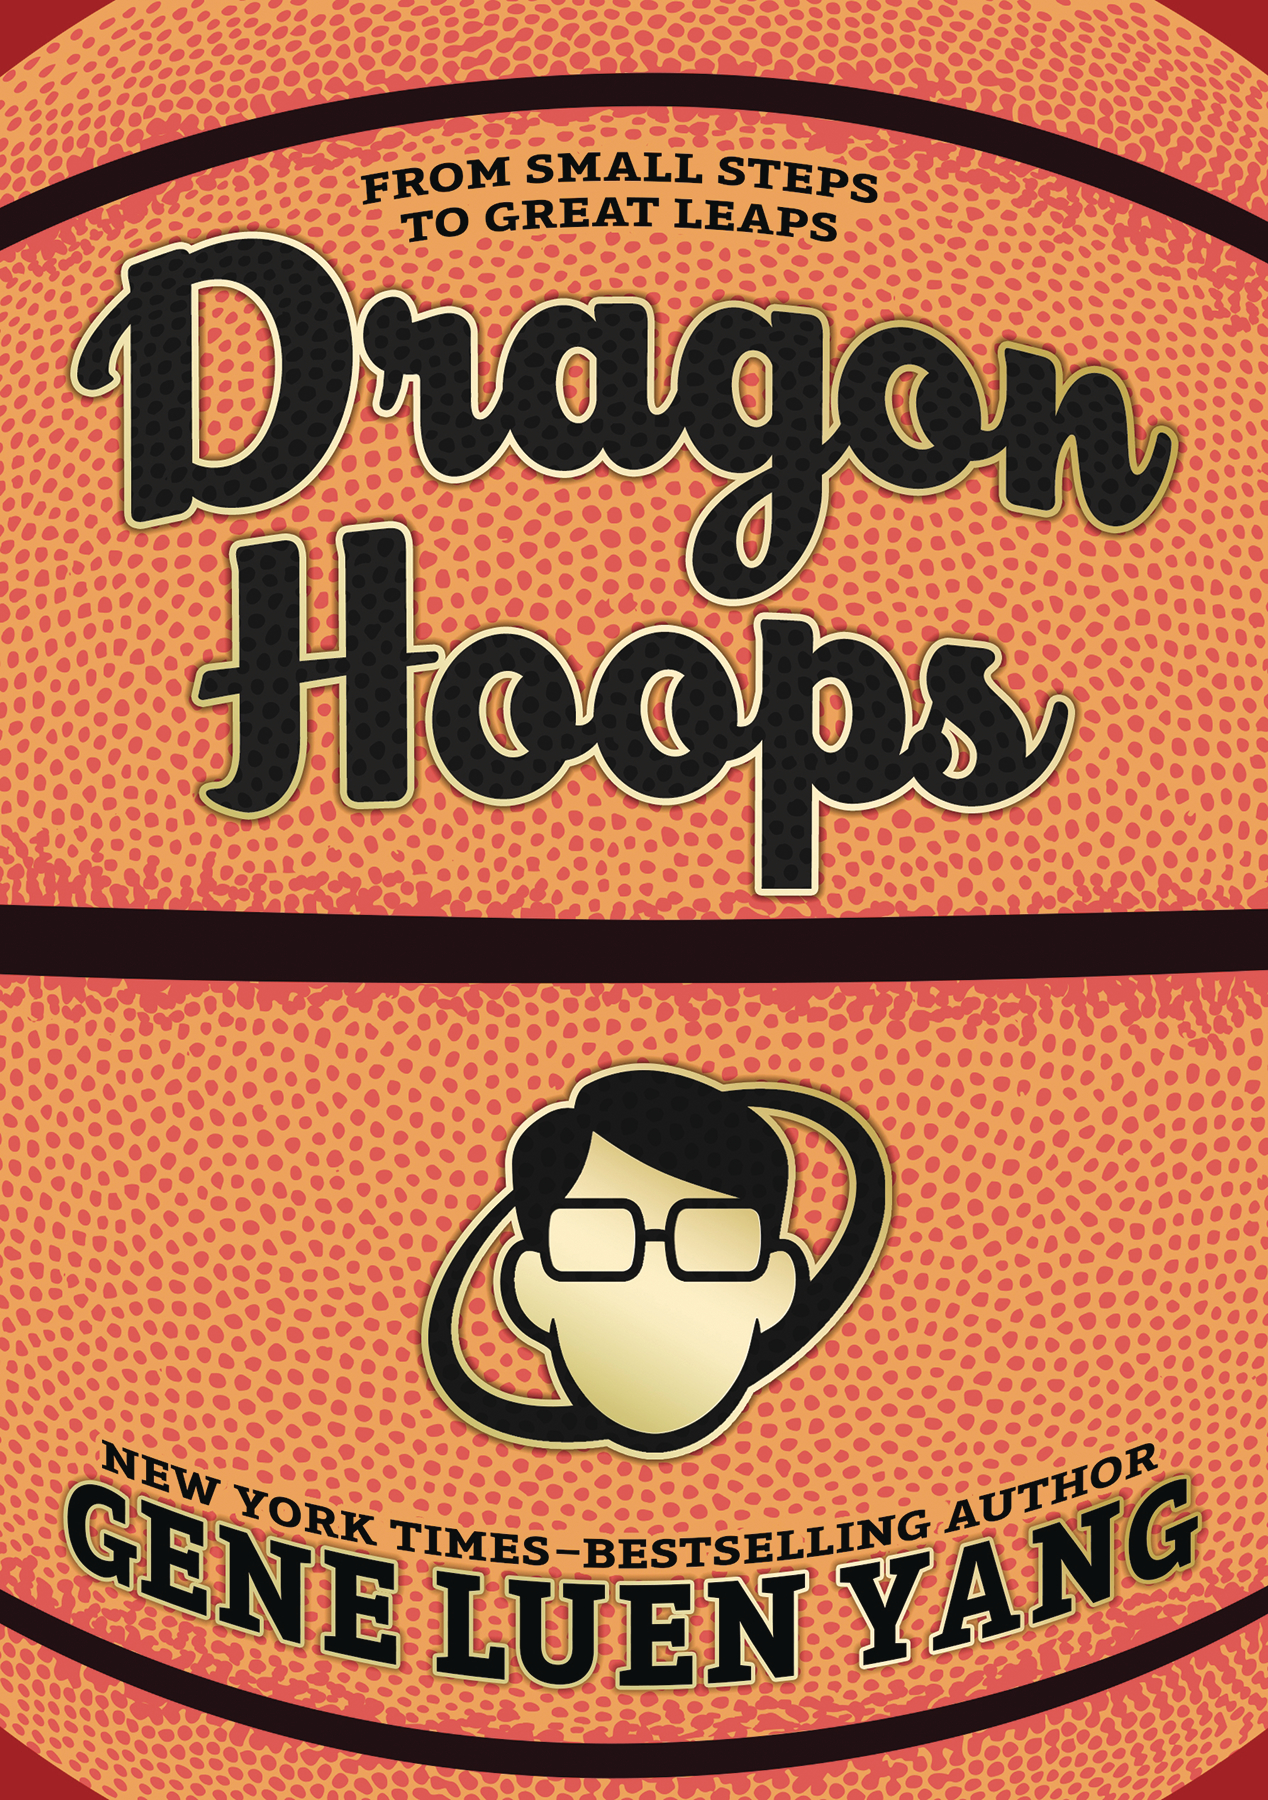 Dragon Hoops Hardcover Graphic Novel